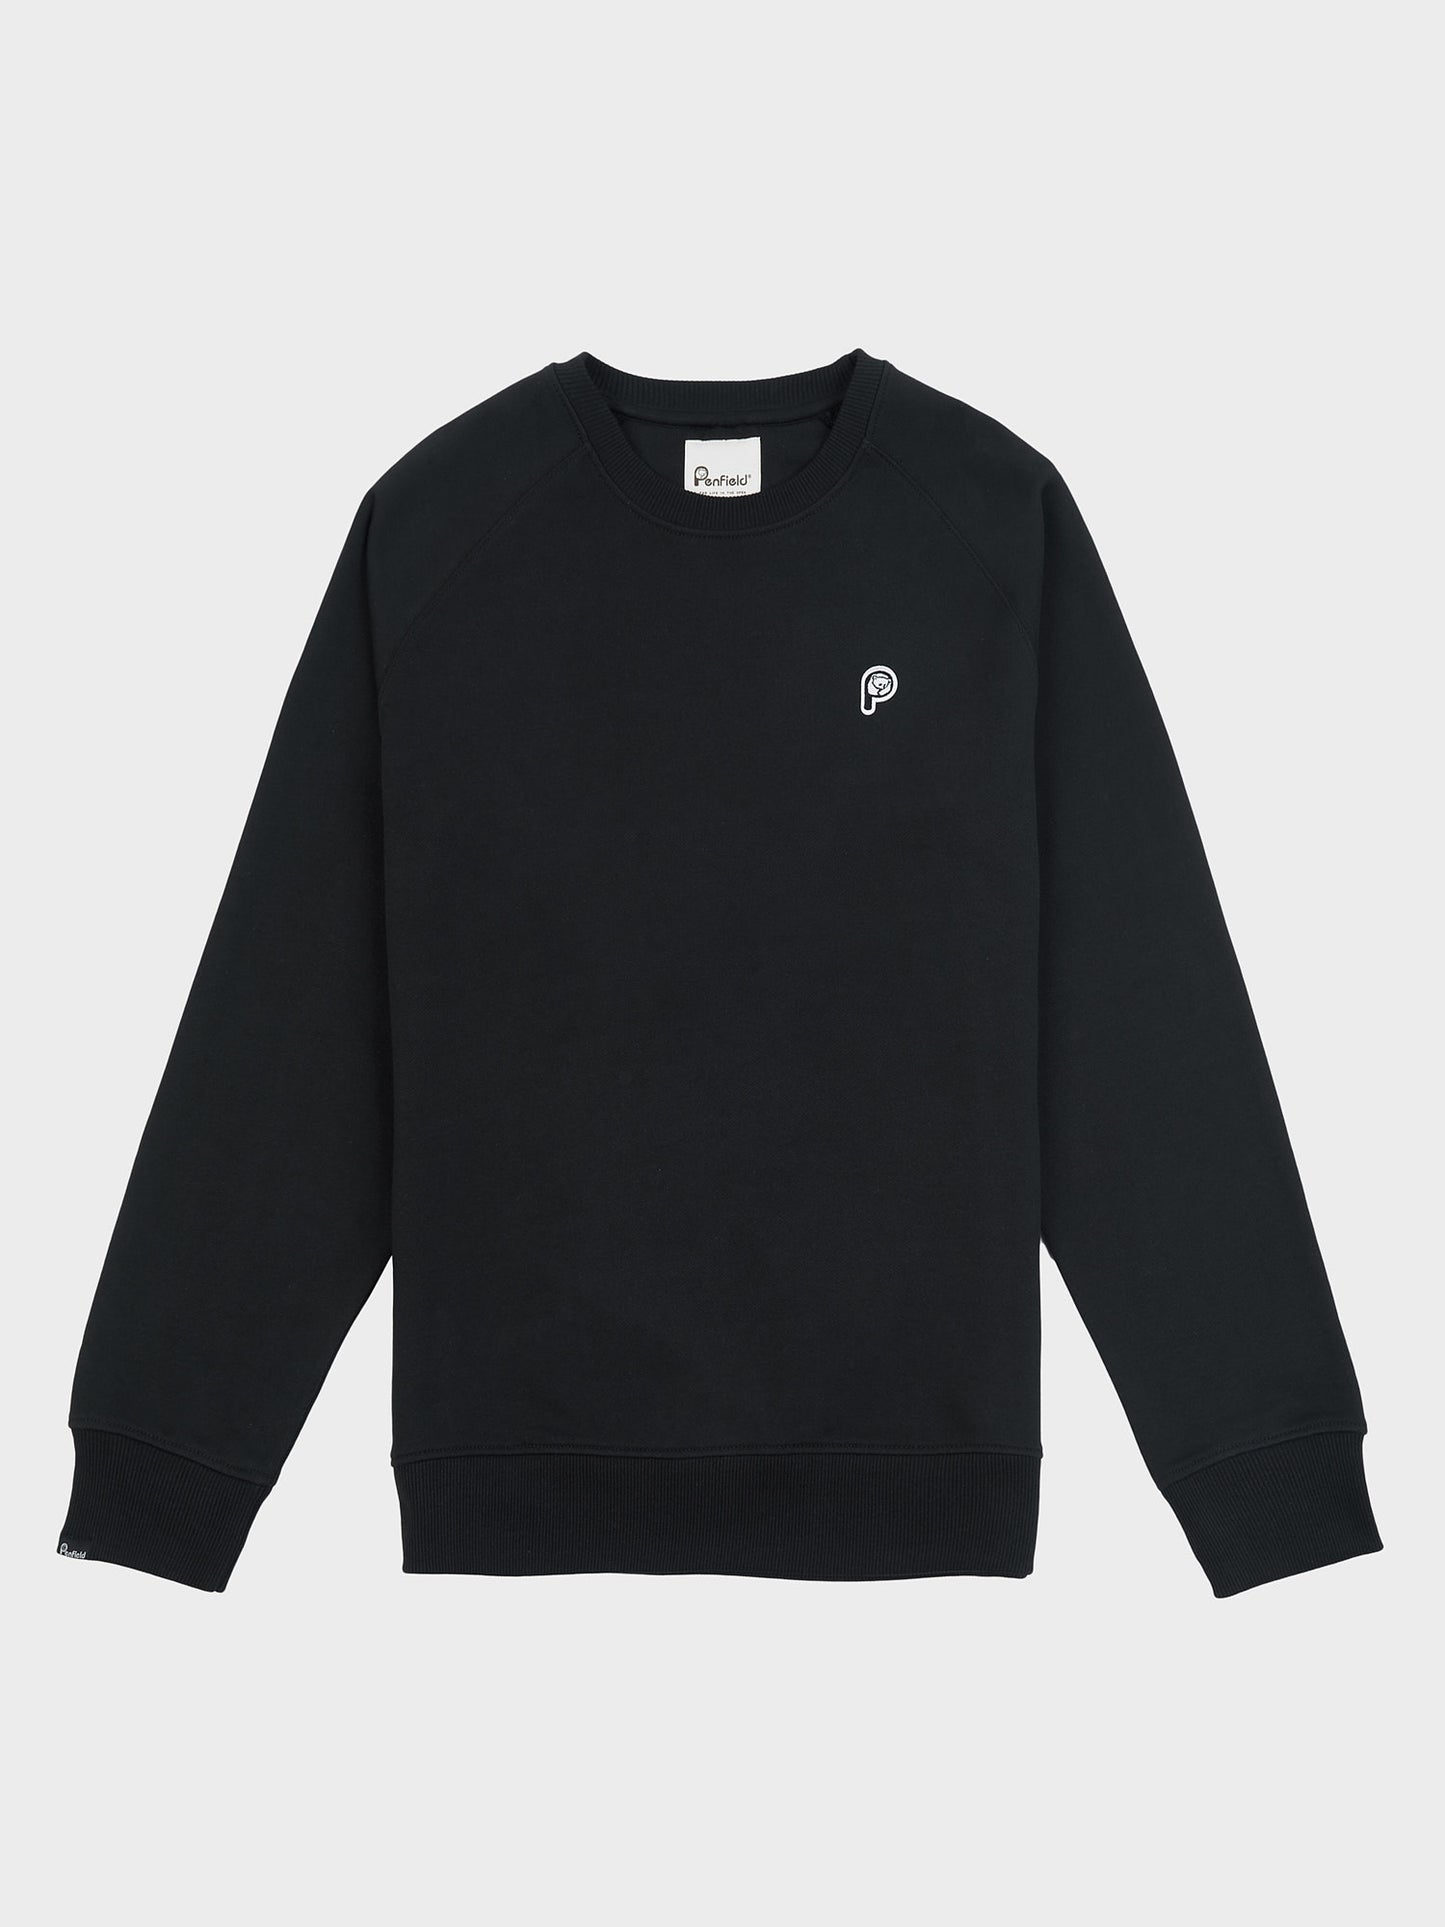 P Bear Sweater in Black